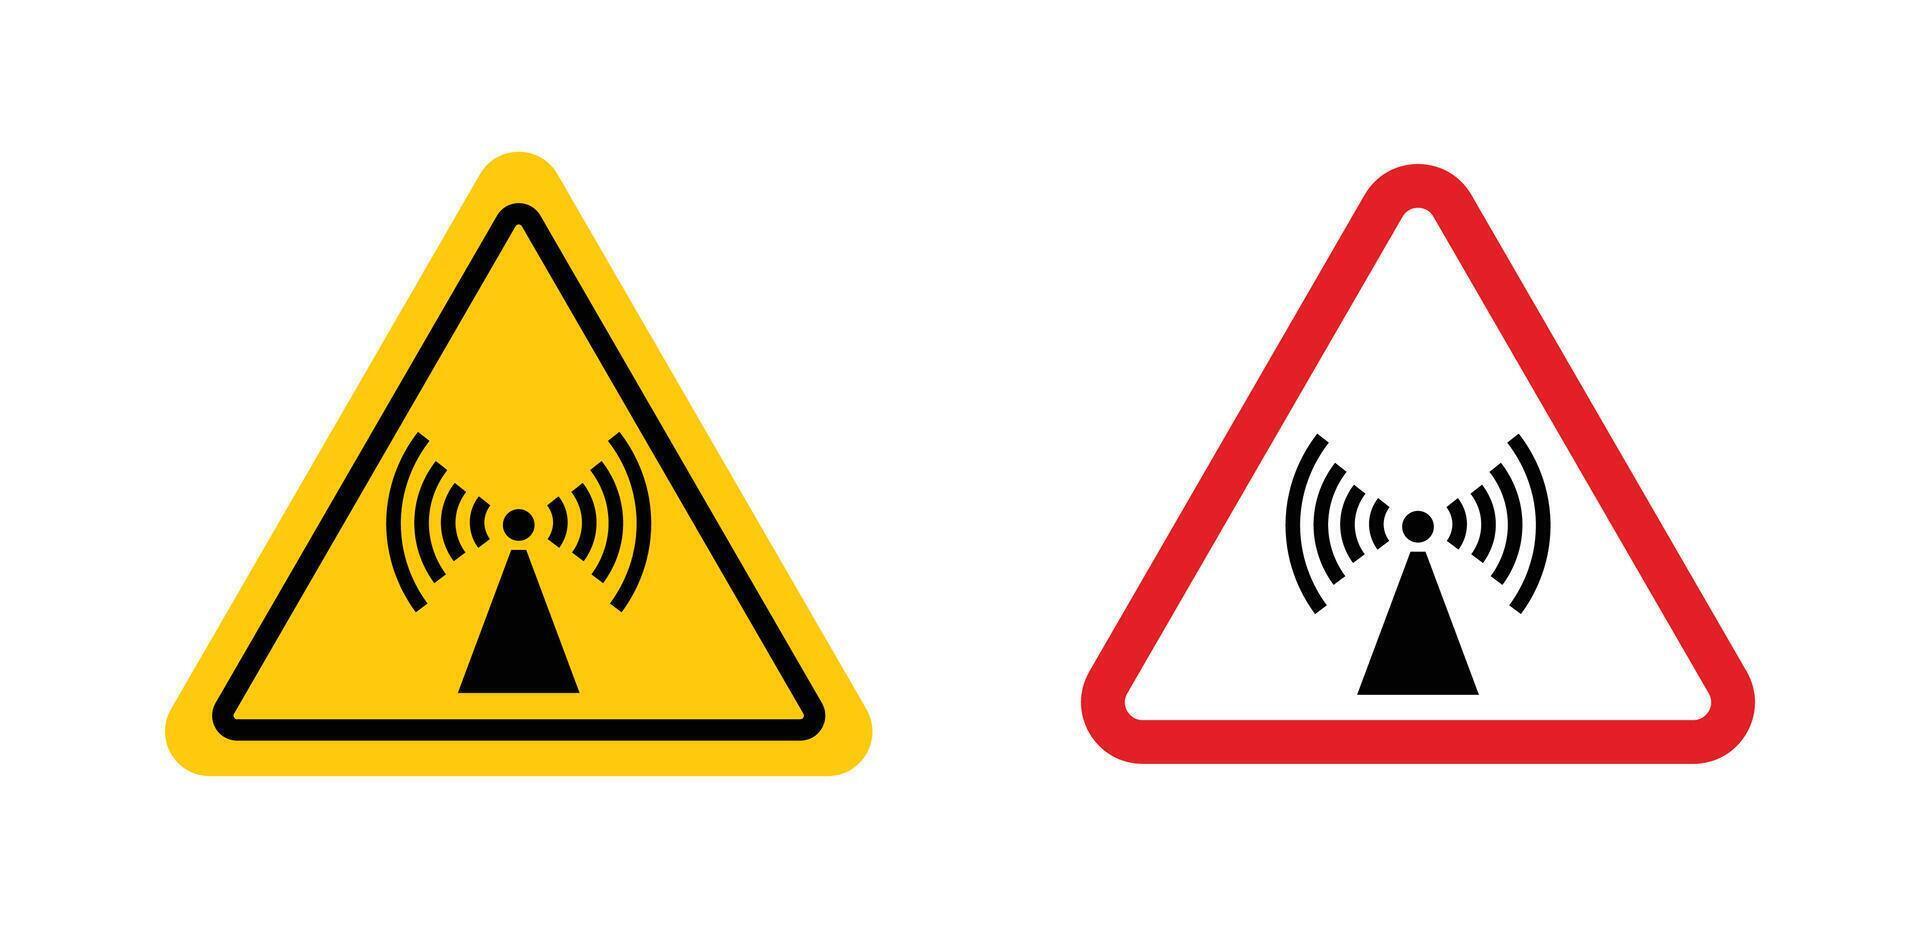 Non ionizing radiation hazard sign vector